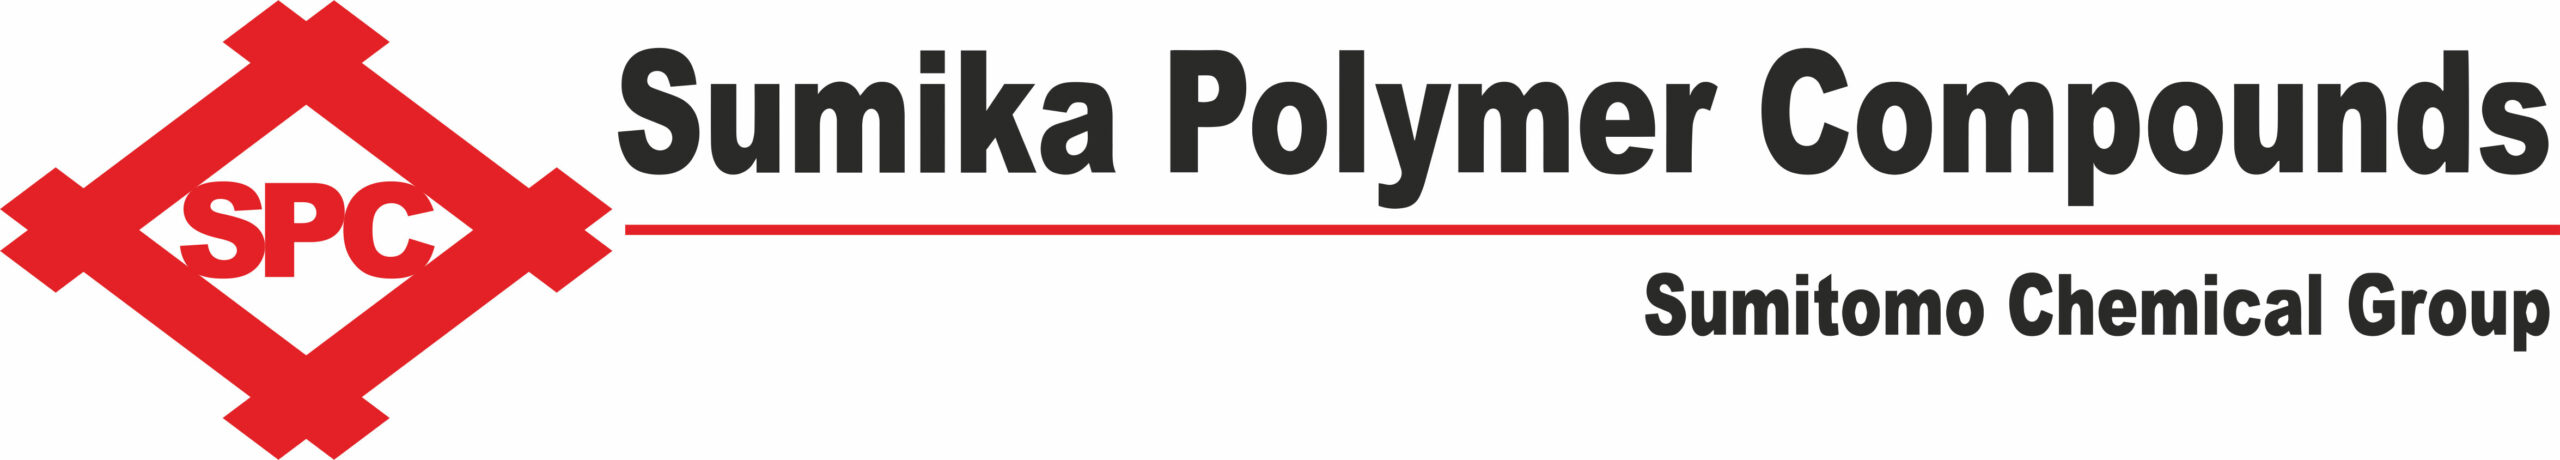 Sumika Polymer Compounds Turkey Plastik Sanayi ve Ticaret A.Ş. Manisa Şubesi